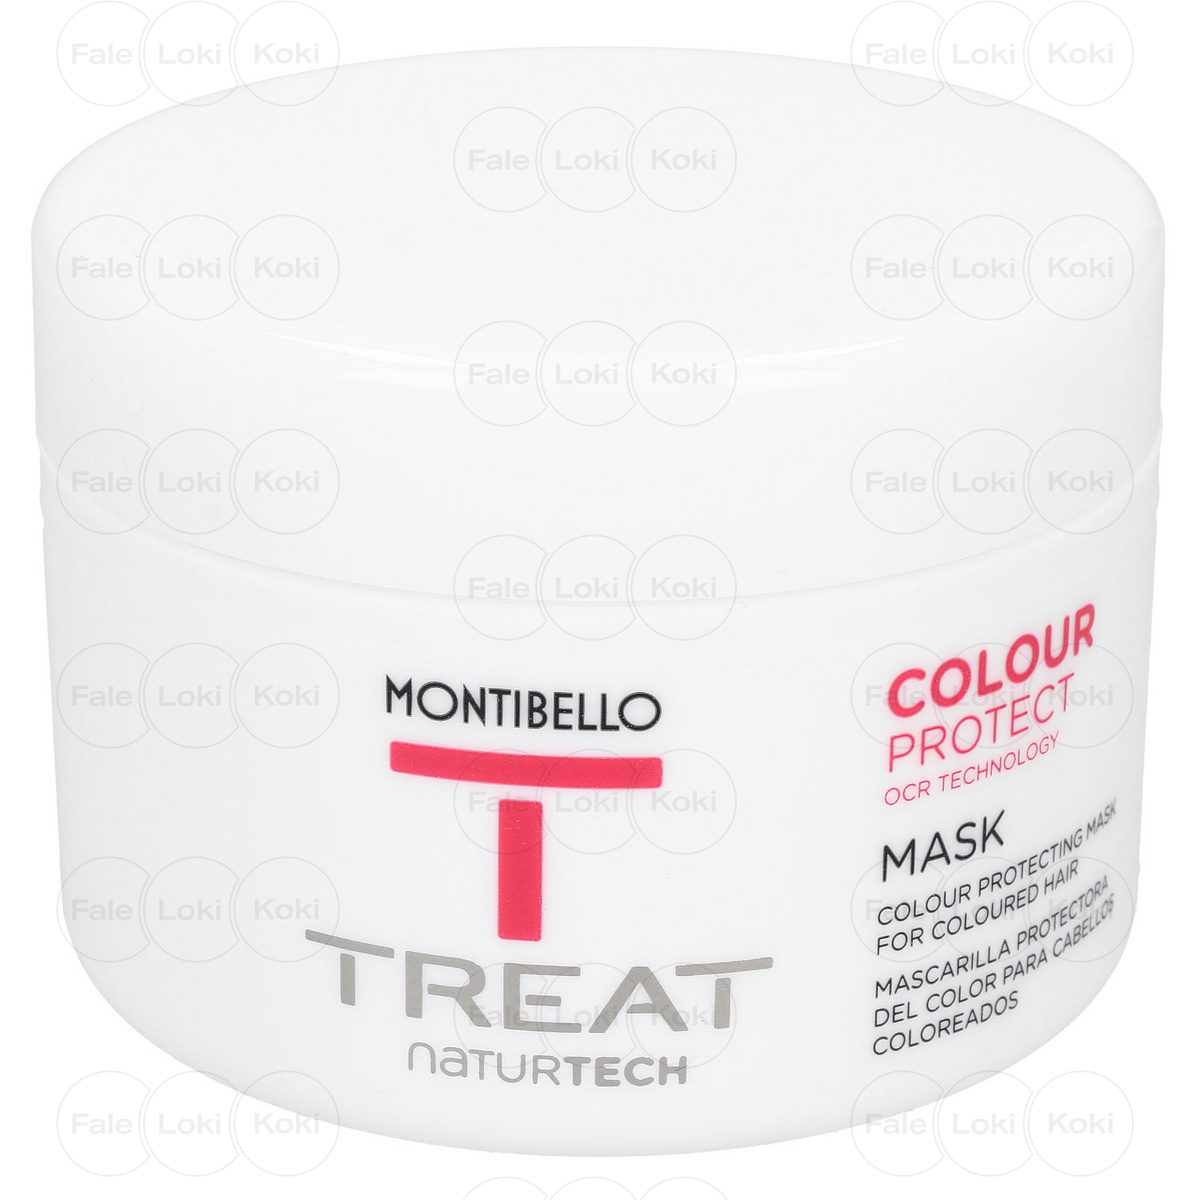 MONTIBELLO TREAT NATURTECH maska do włosów farbowanych Color Protect 200 ml